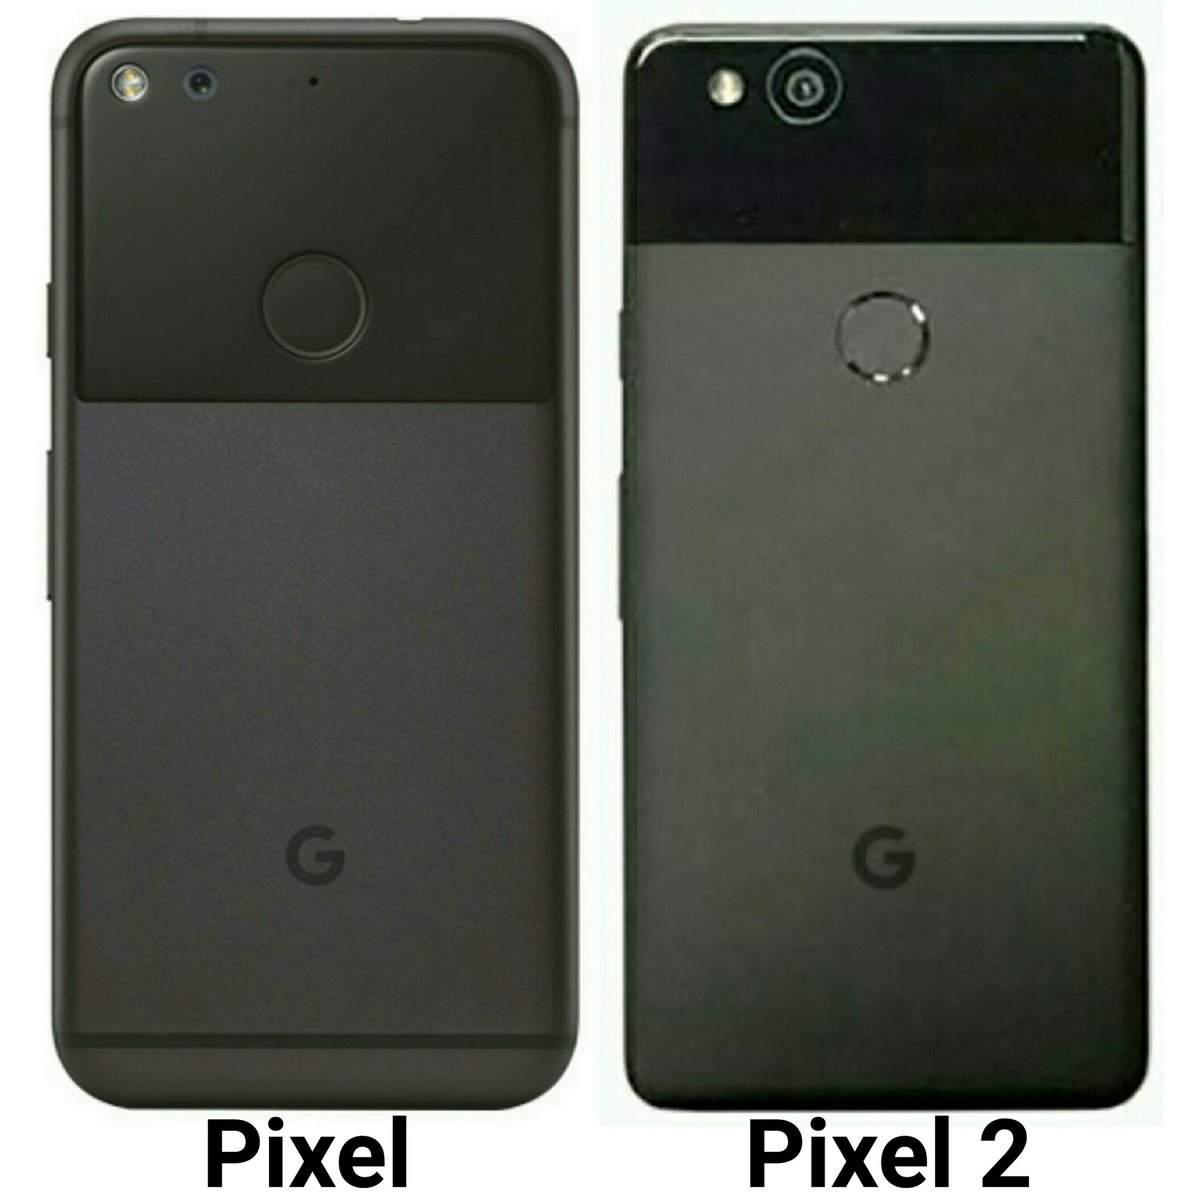 Google to Unveil Next Generation Pixel Smartphones on October 4th [Video]